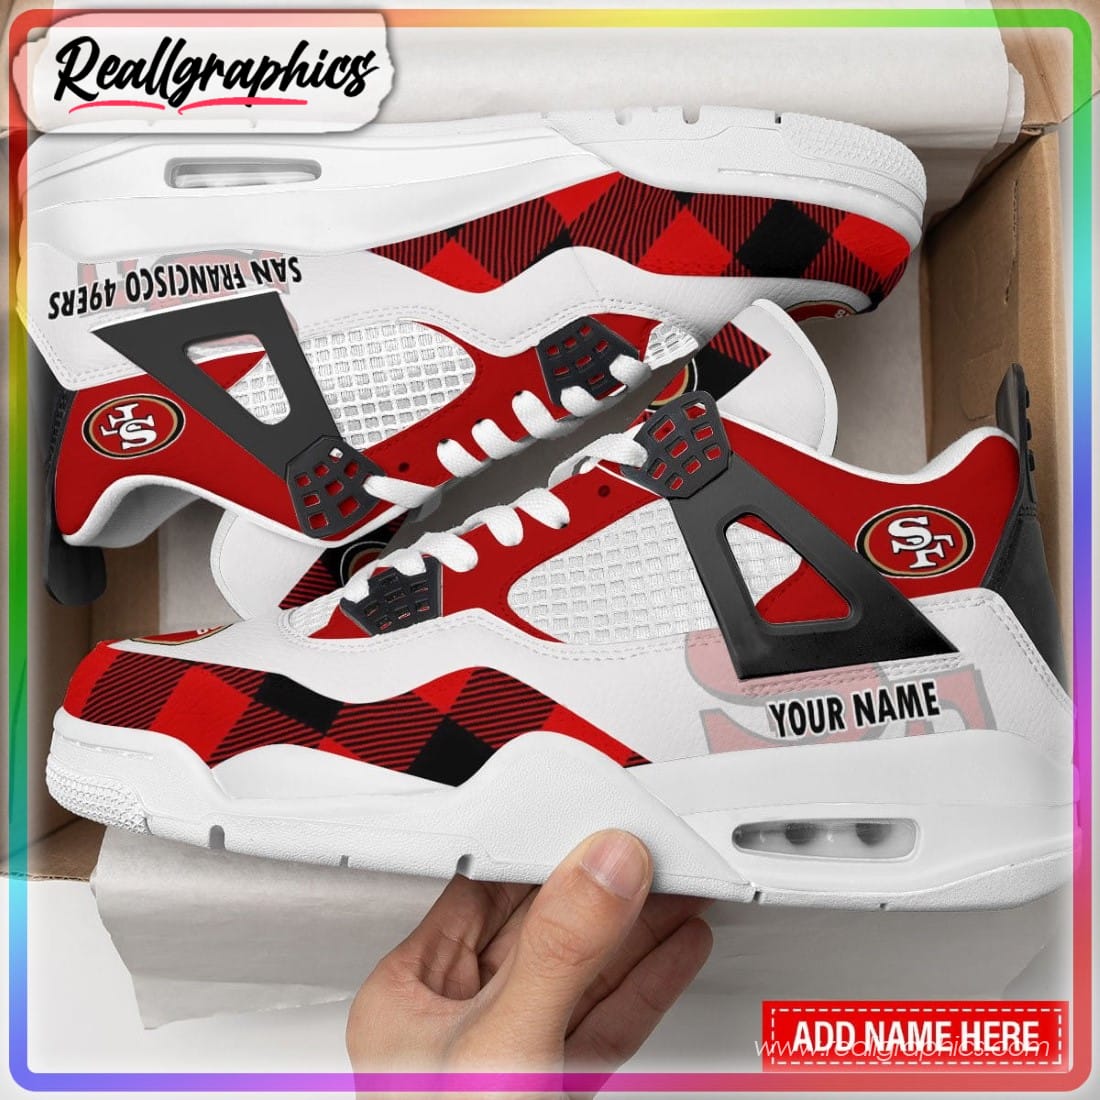 San Francisco 49ers, Air Jordan 11, Shoes